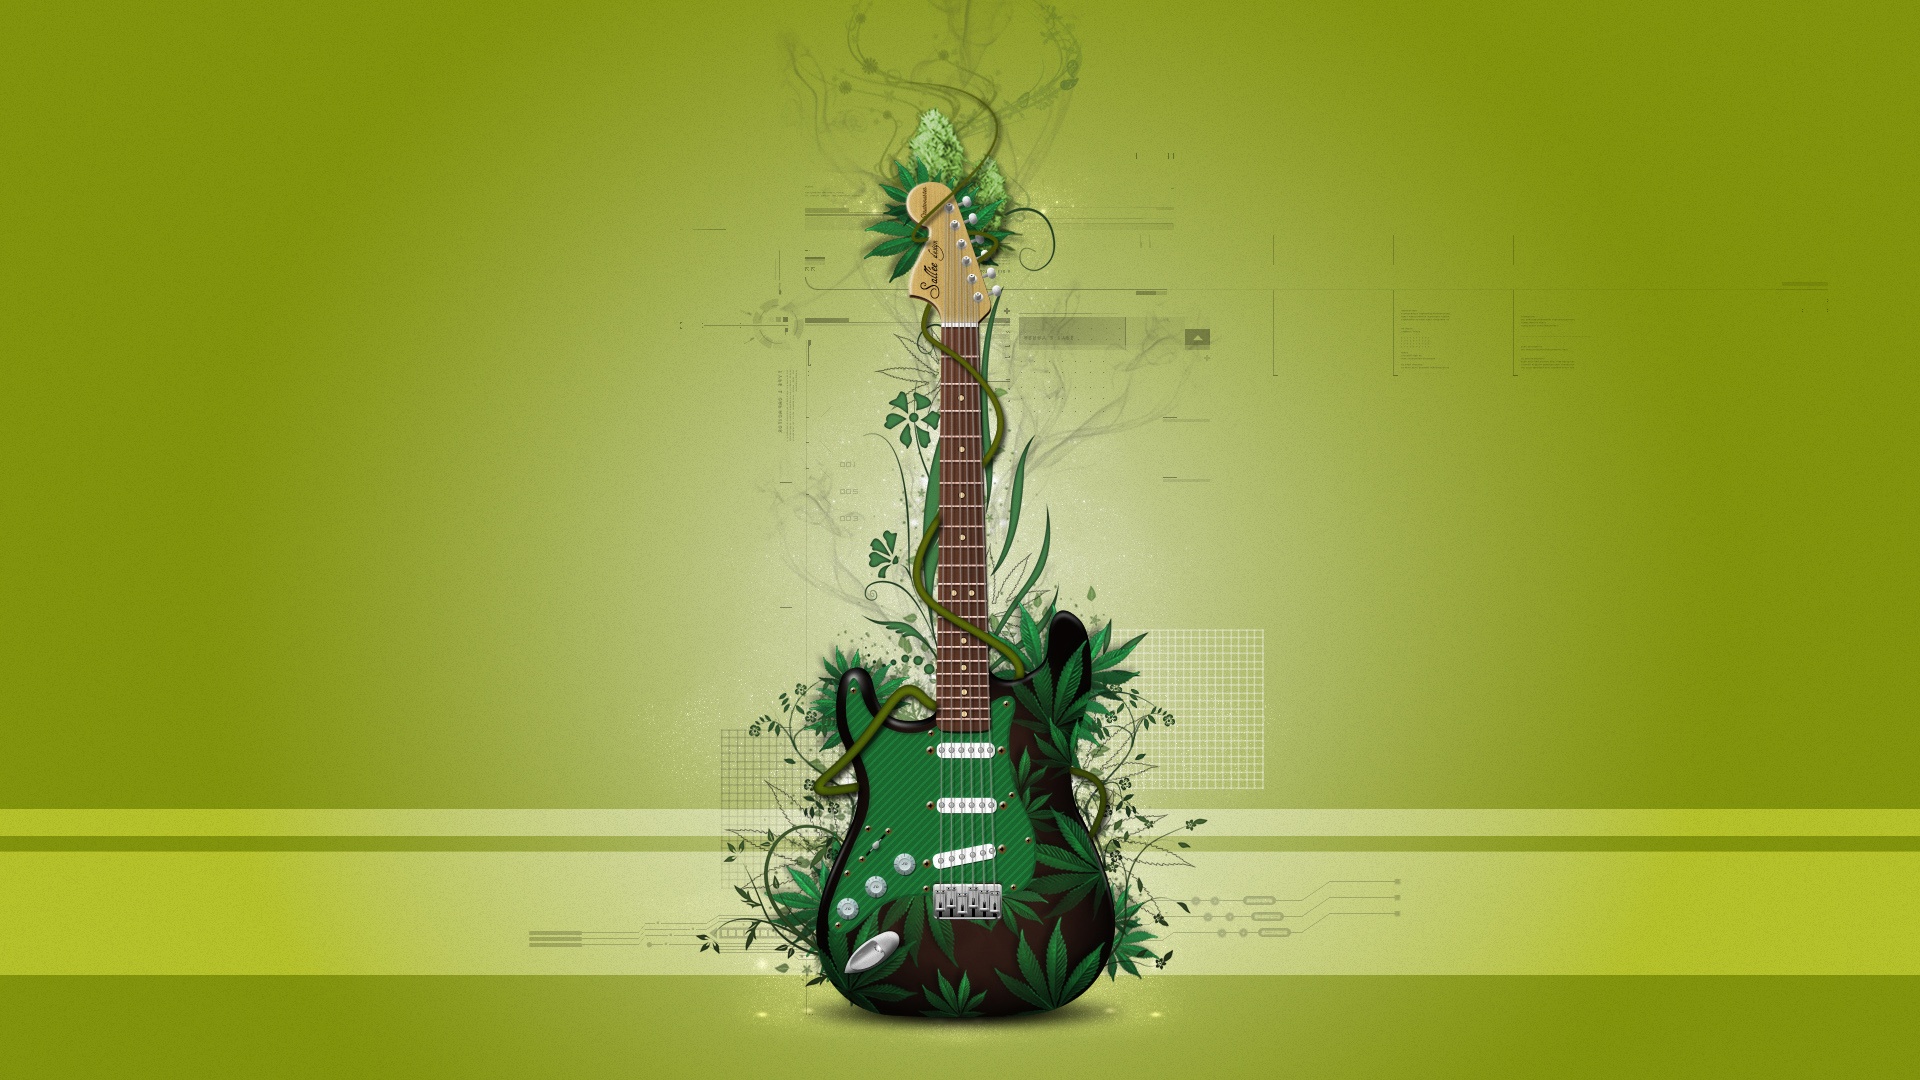 Guitar Wallpapers - Wallpaper, High Definition, High Quality, Widescreen